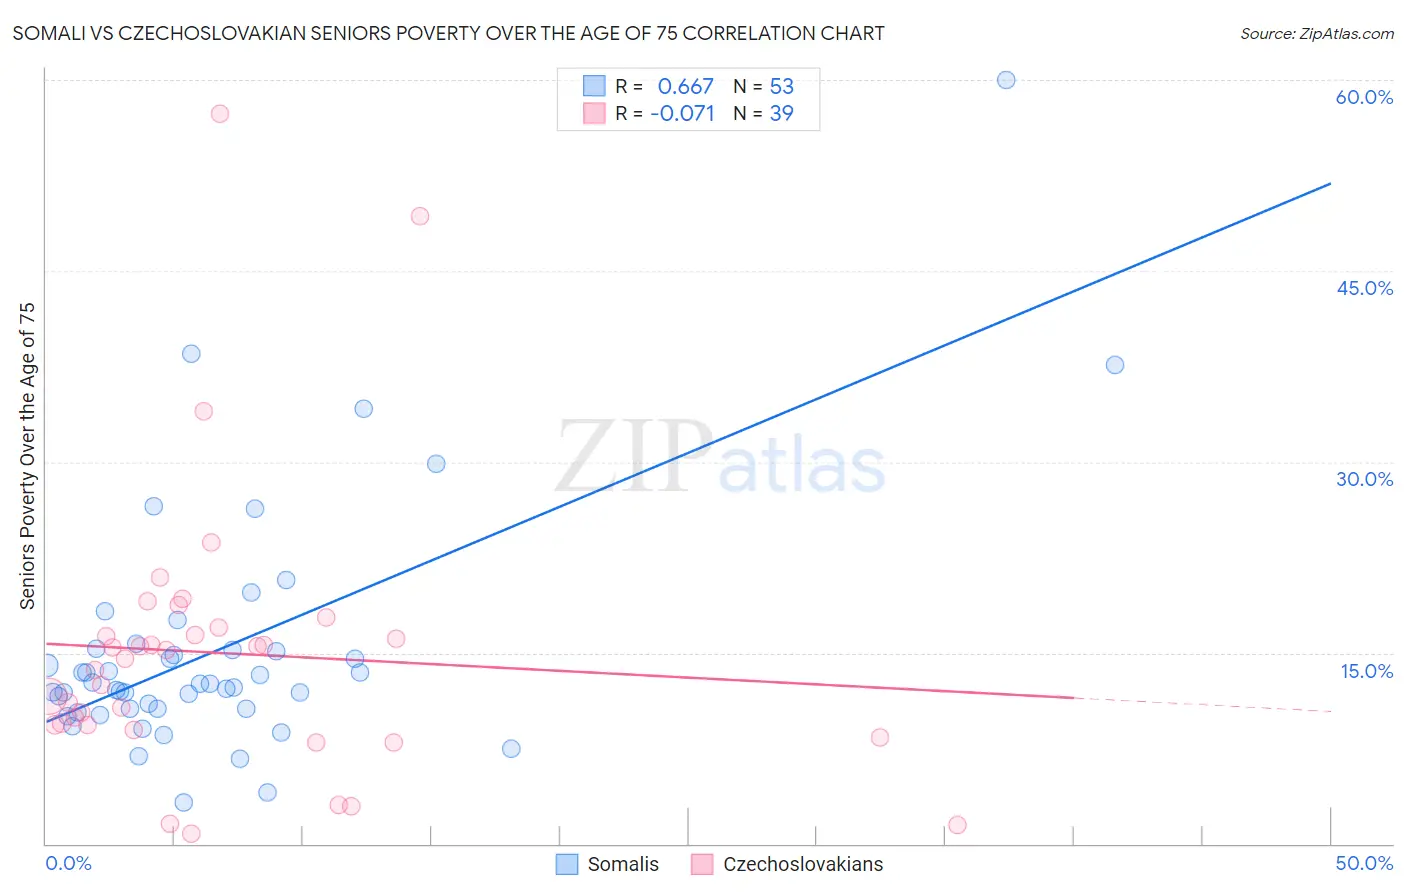 Somali vs Czechoslovakian Seniors Poverty Over the Age of 75